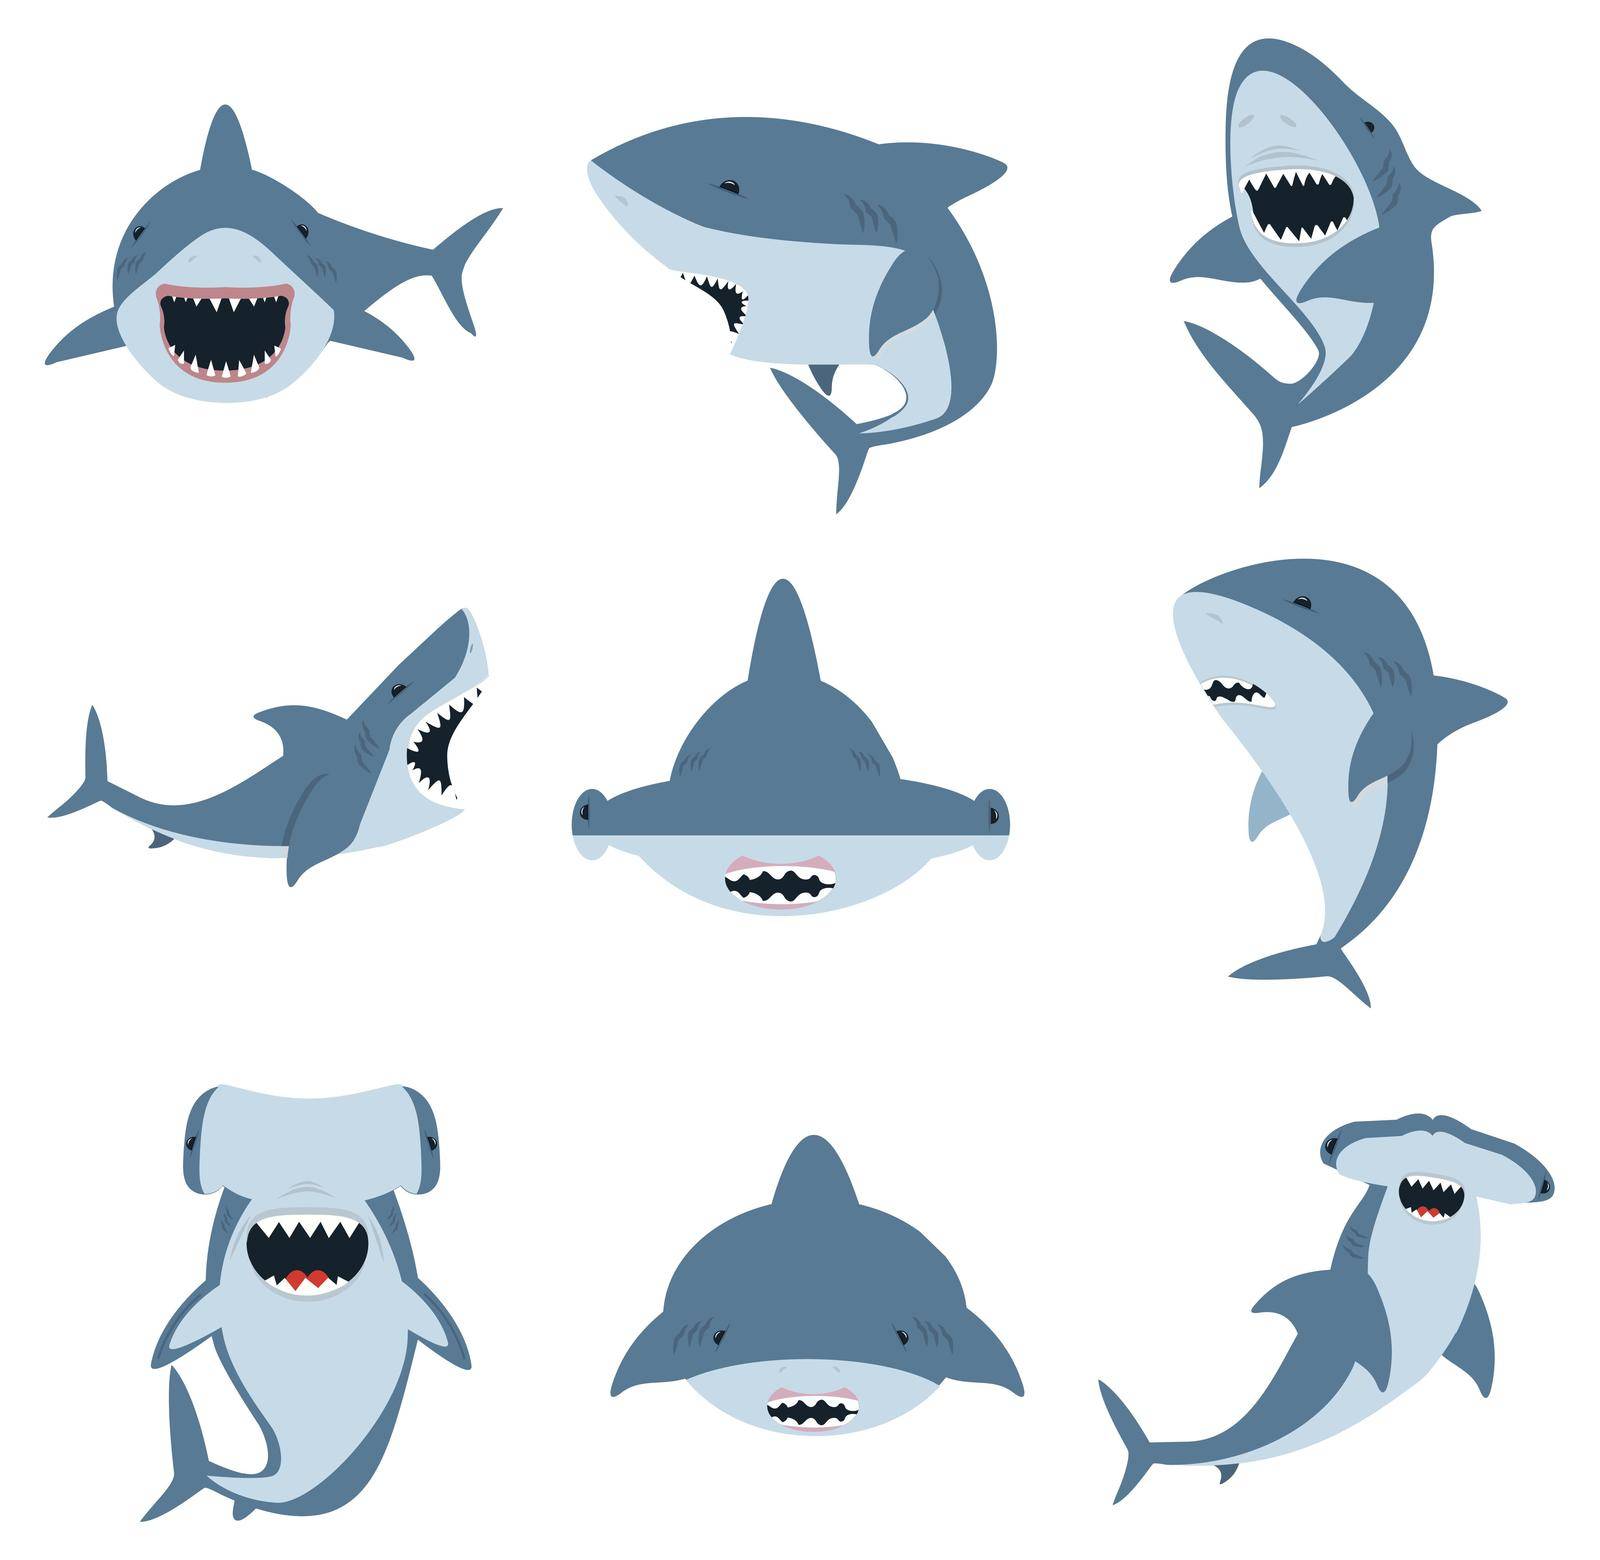 White shark and Hammer head shark set by focus_bell